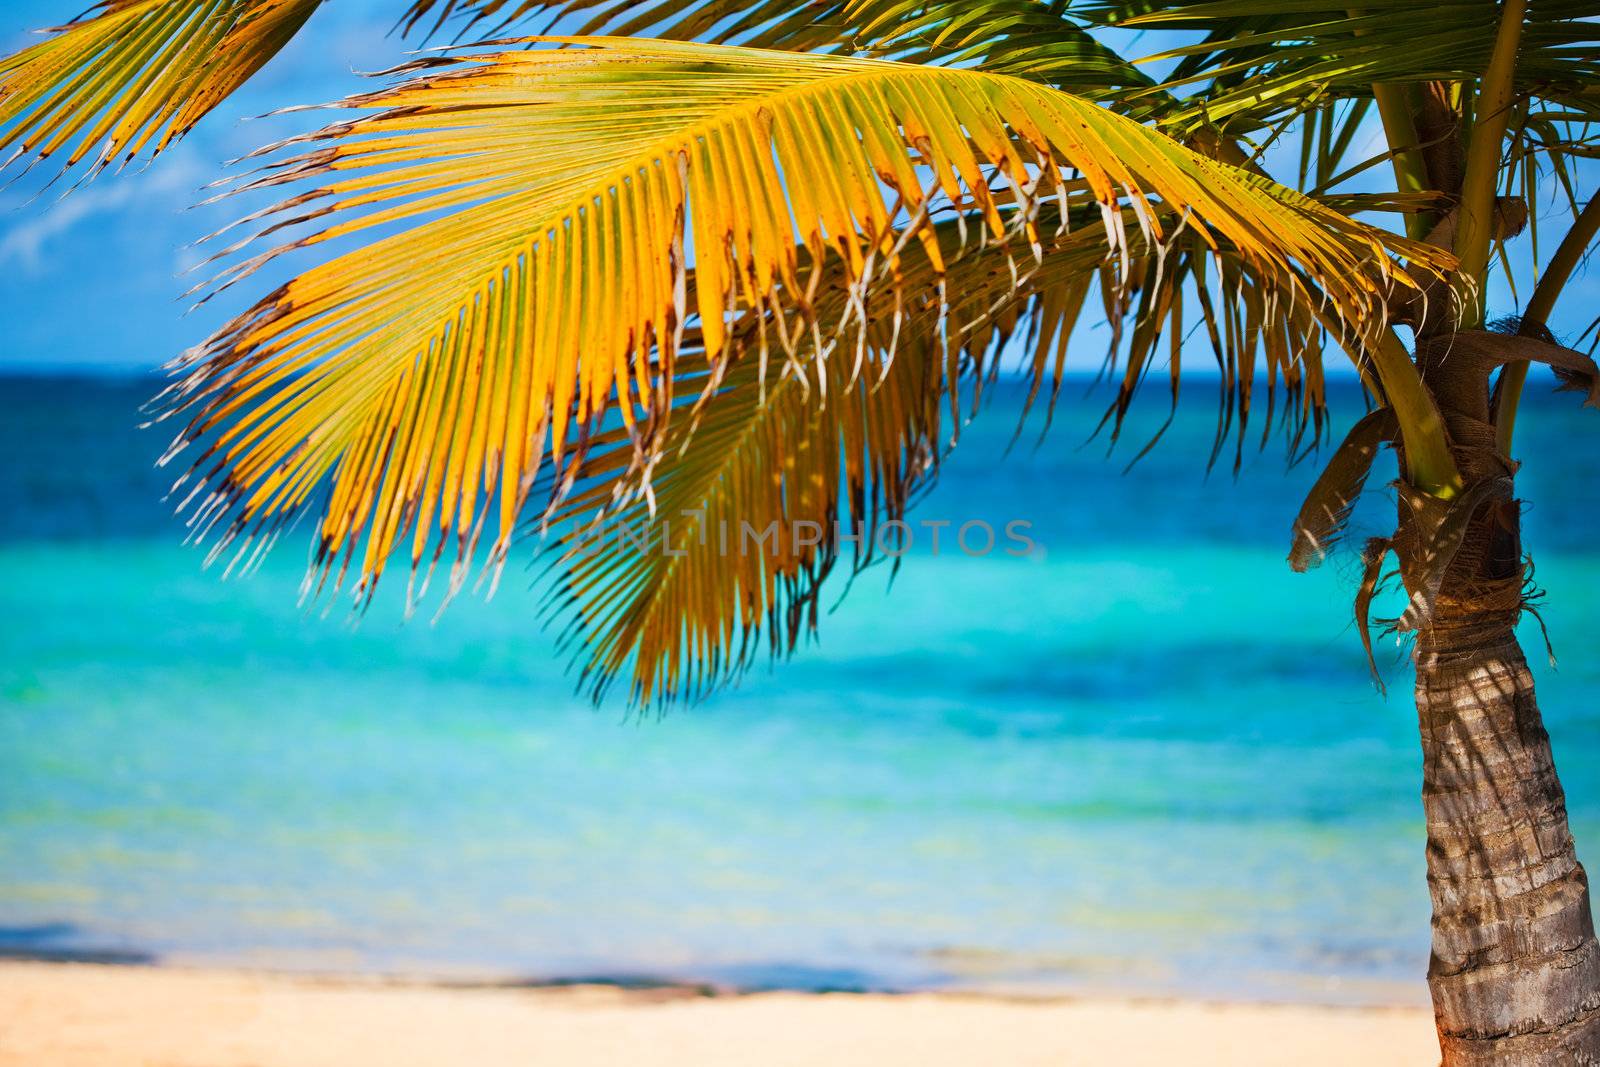 Seashore of Caribbean sea with a palm tree